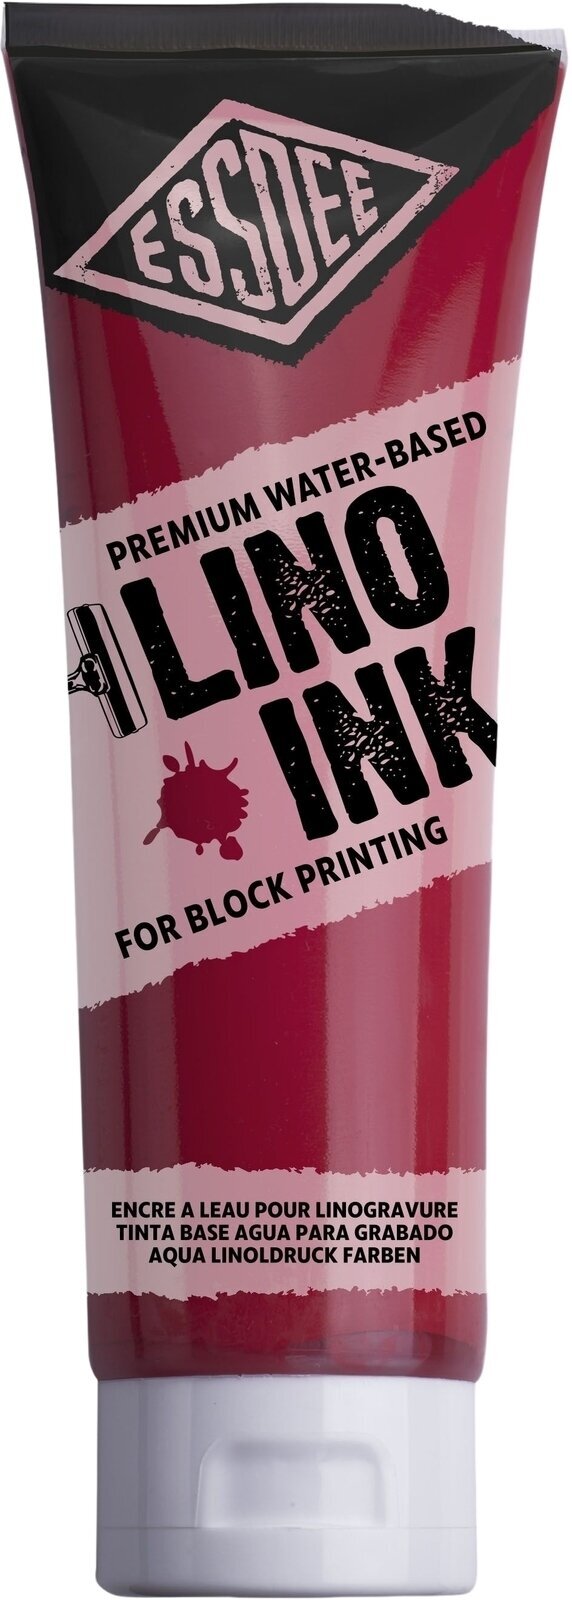 Peintures pour la linogravure Essdee Block Printing Ink Peintures pour la linogravure Brilliant Red (Scarlet) 300 ml